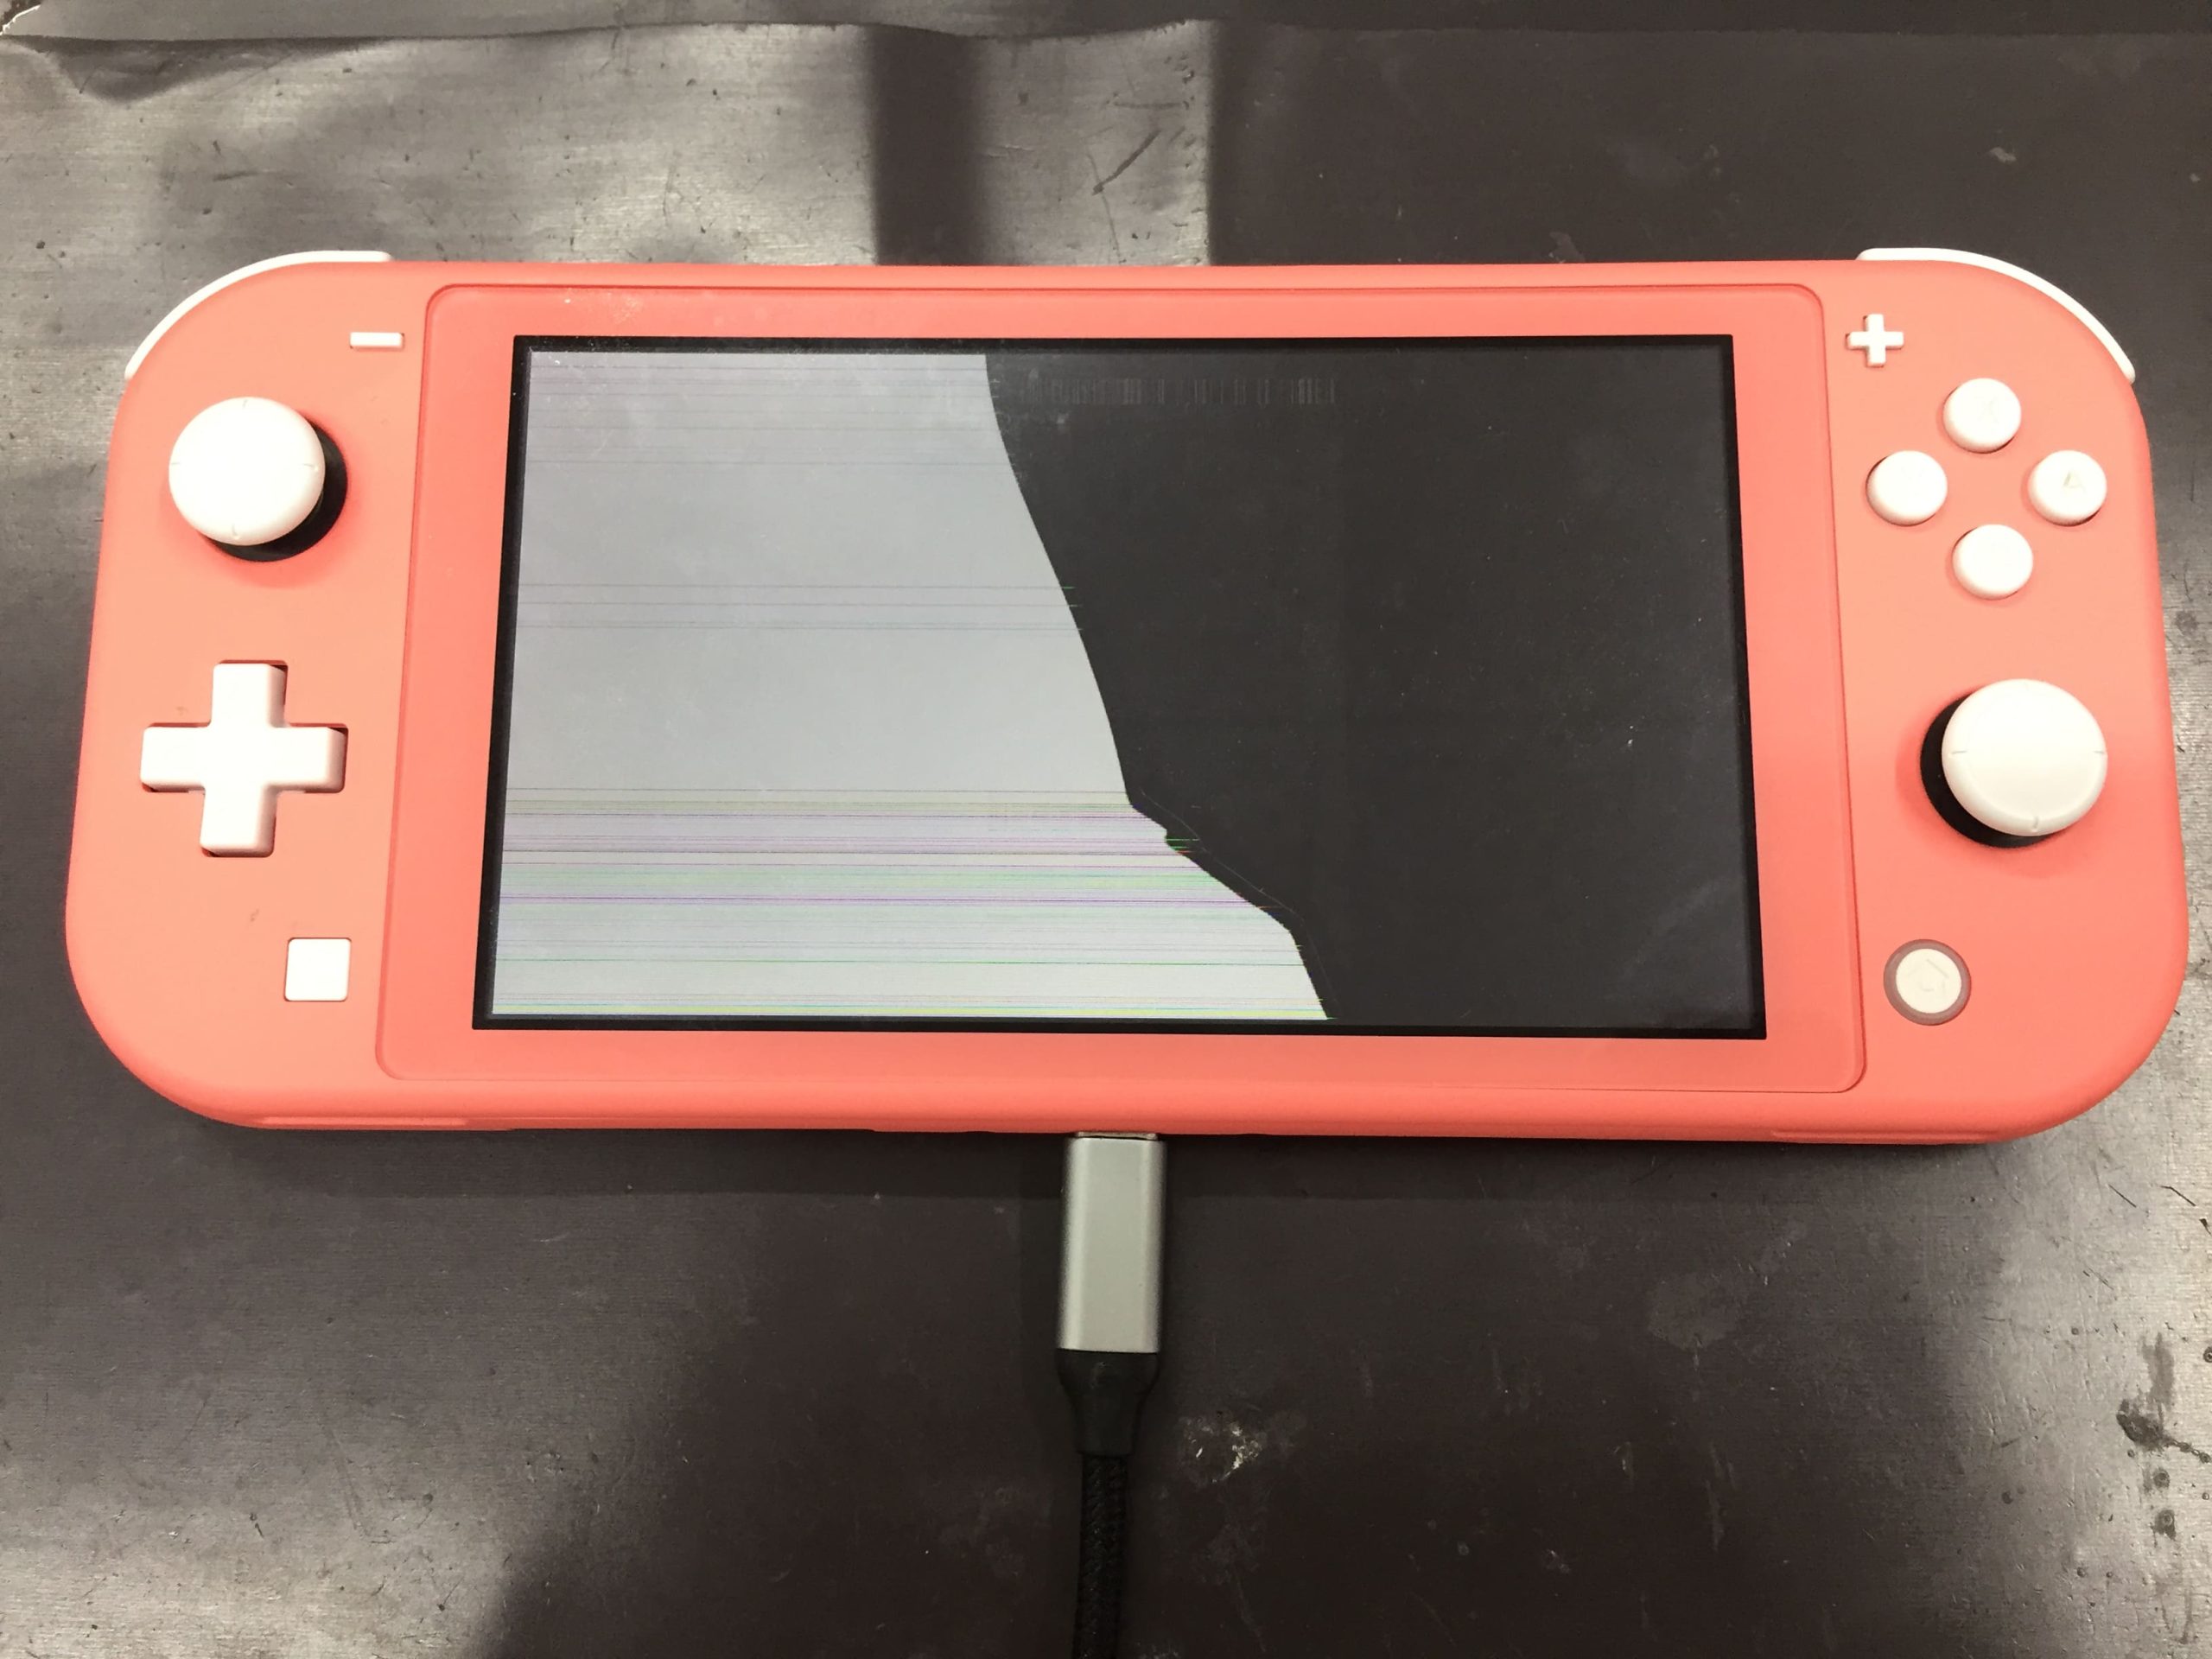 【NintendoSwitchLite】衝撃で画面に横線が入ってしまったスイッチ 